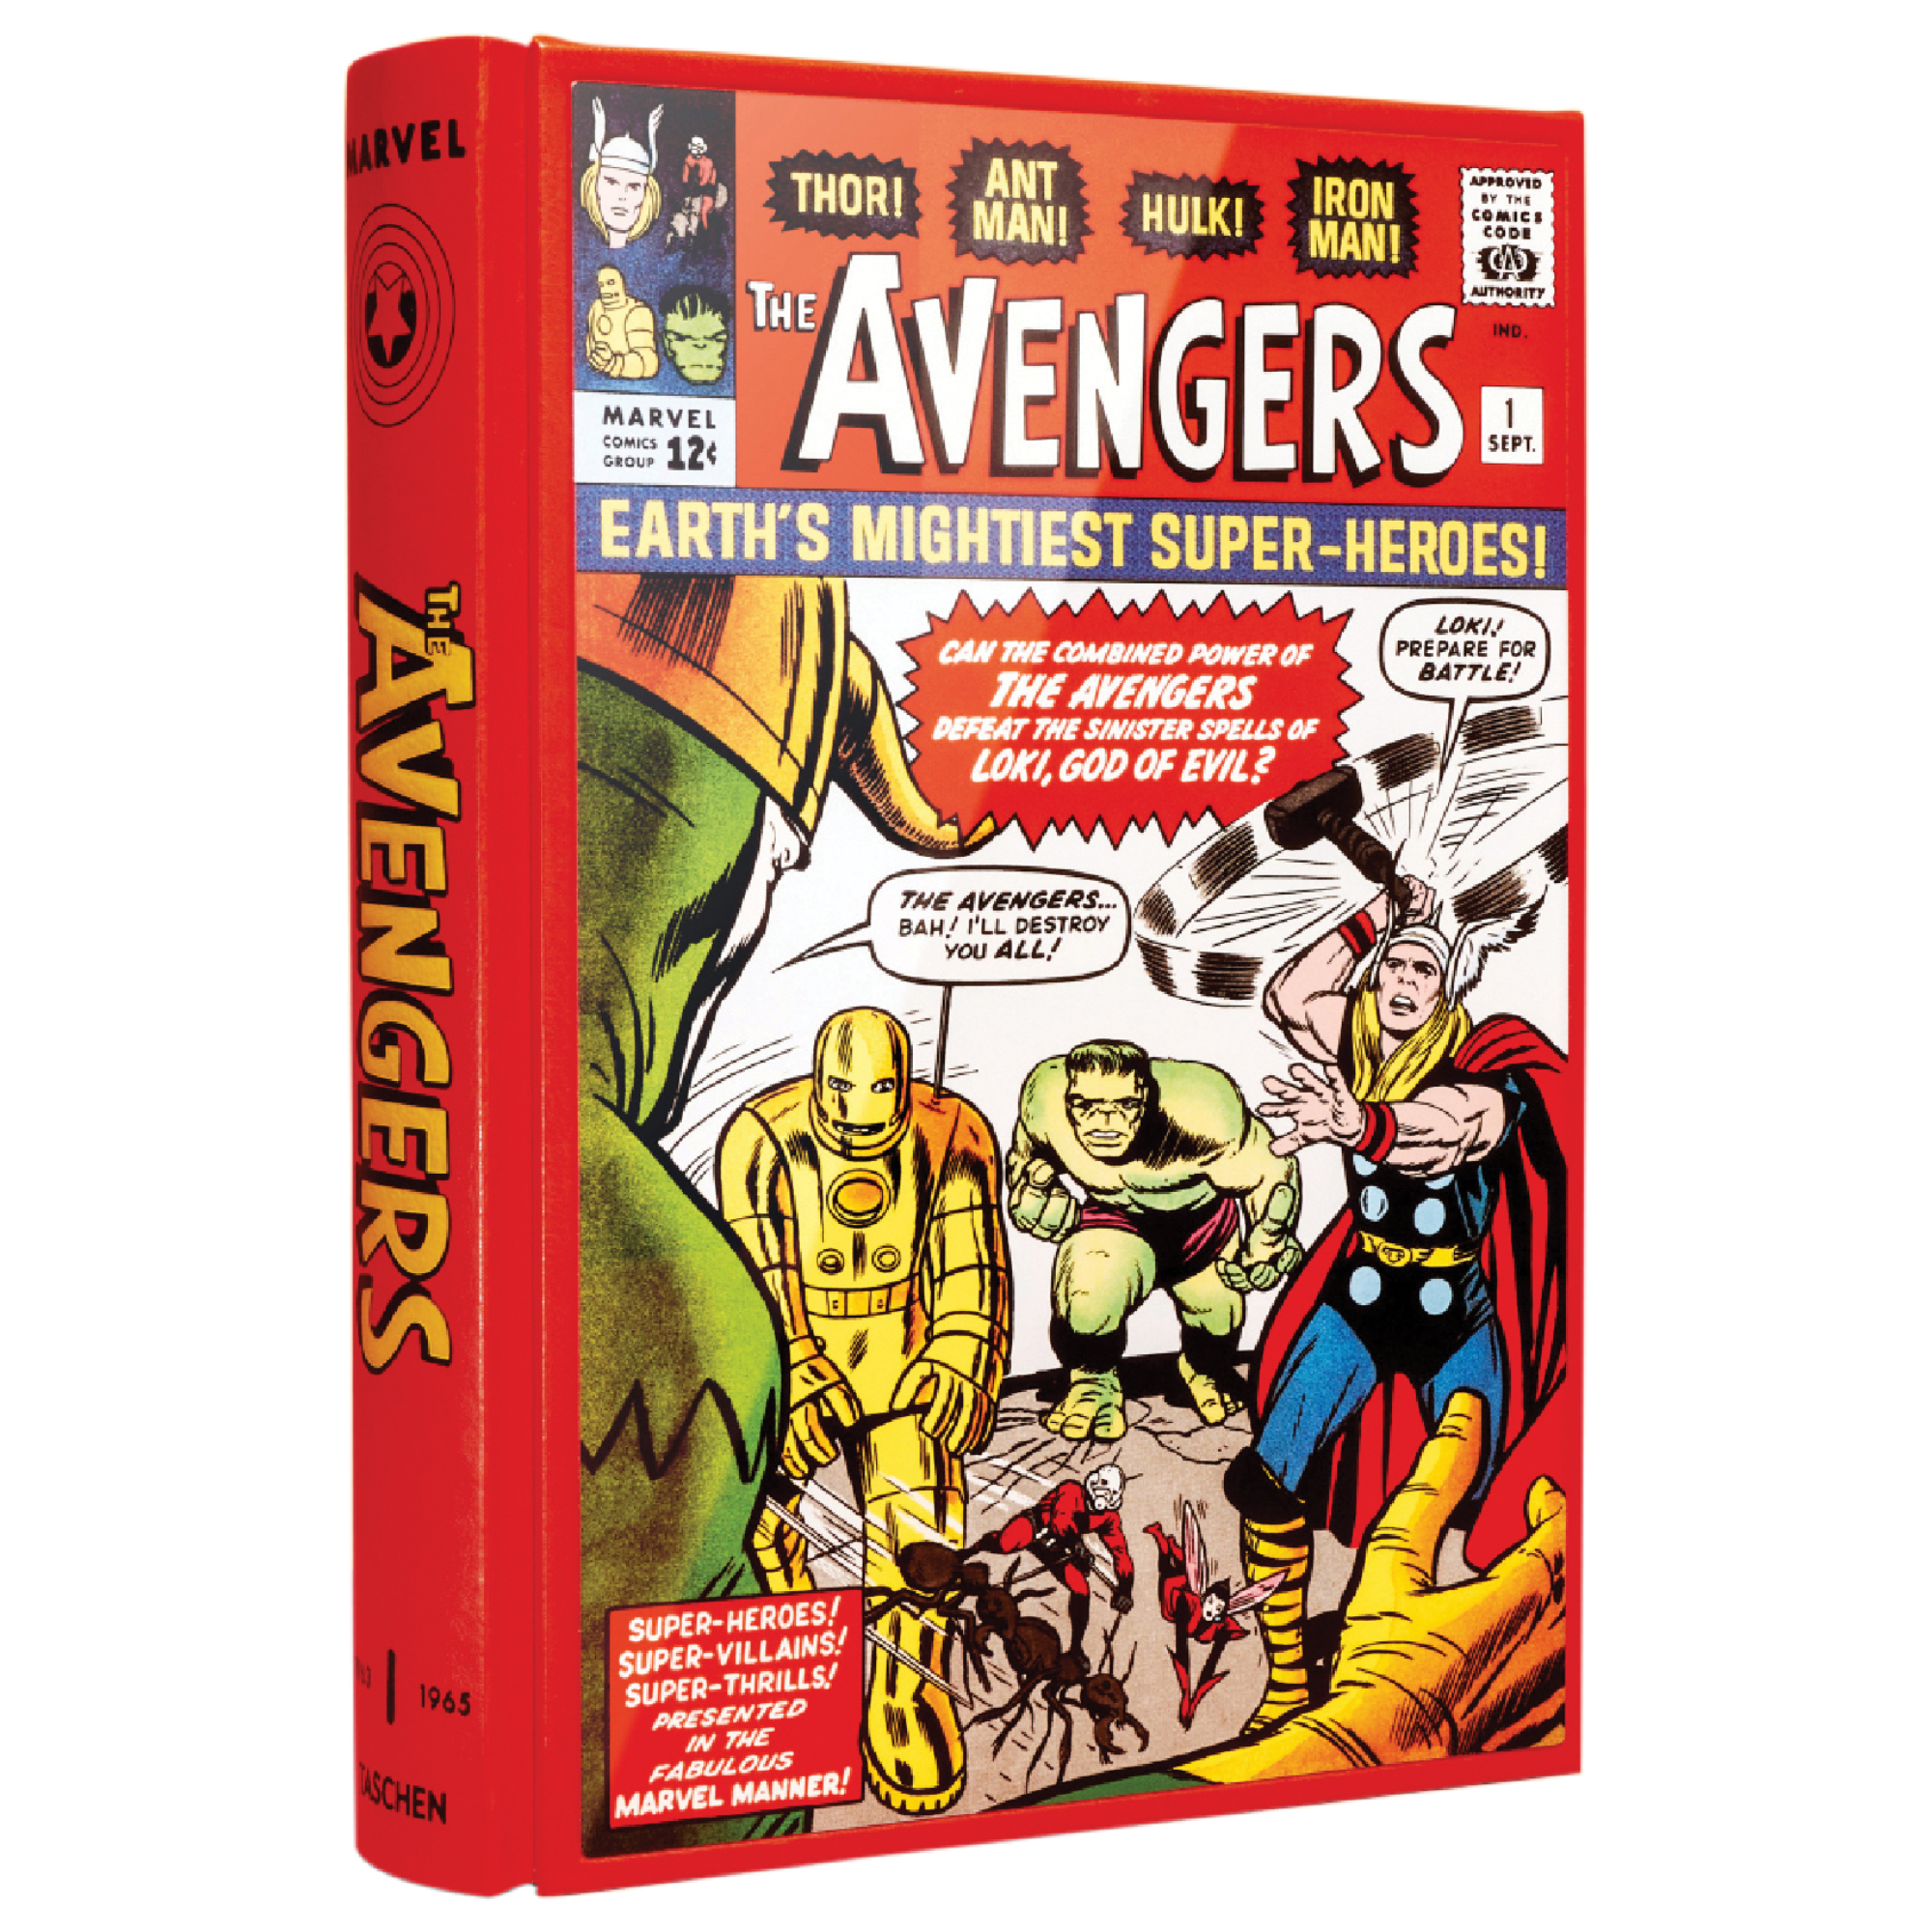 Avengers $600 edition 3899 c slp